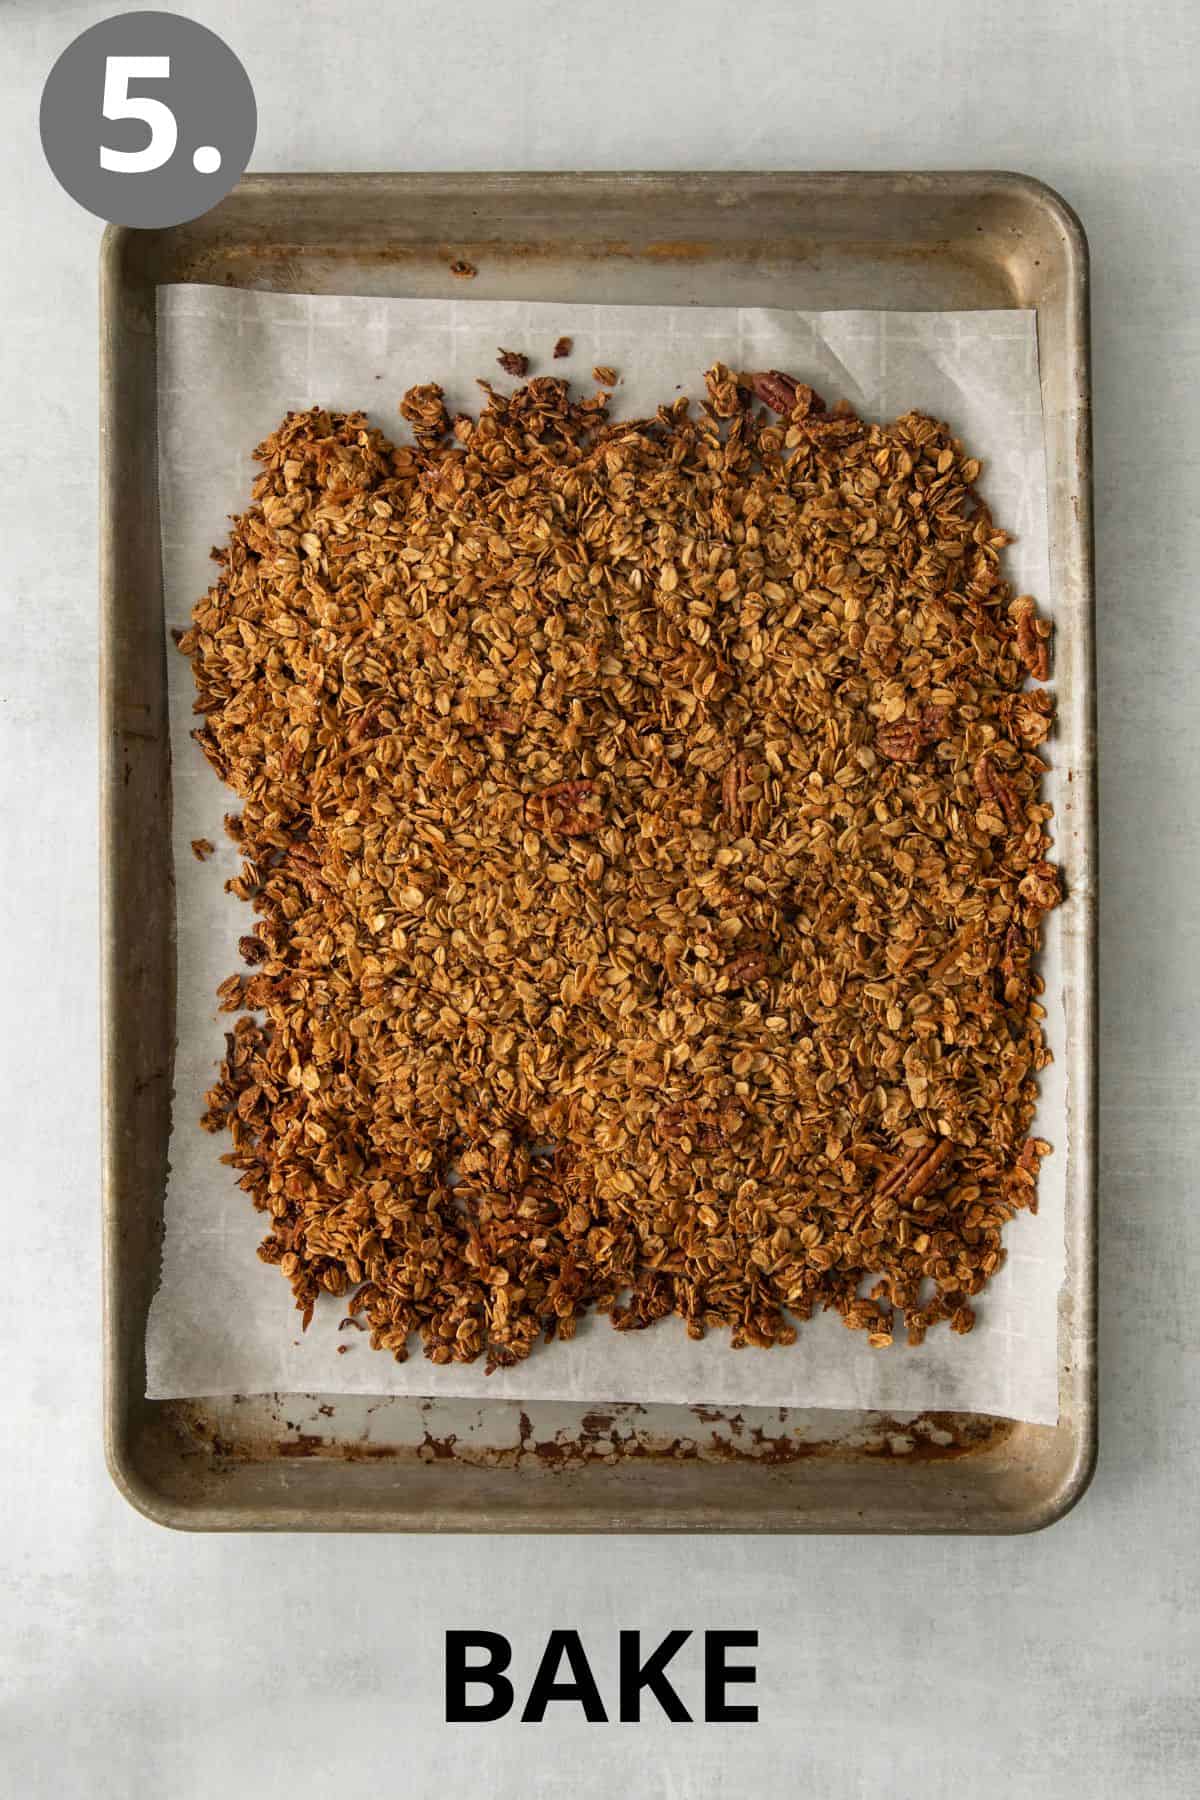 Gluten-free granola baked on a baking sheet